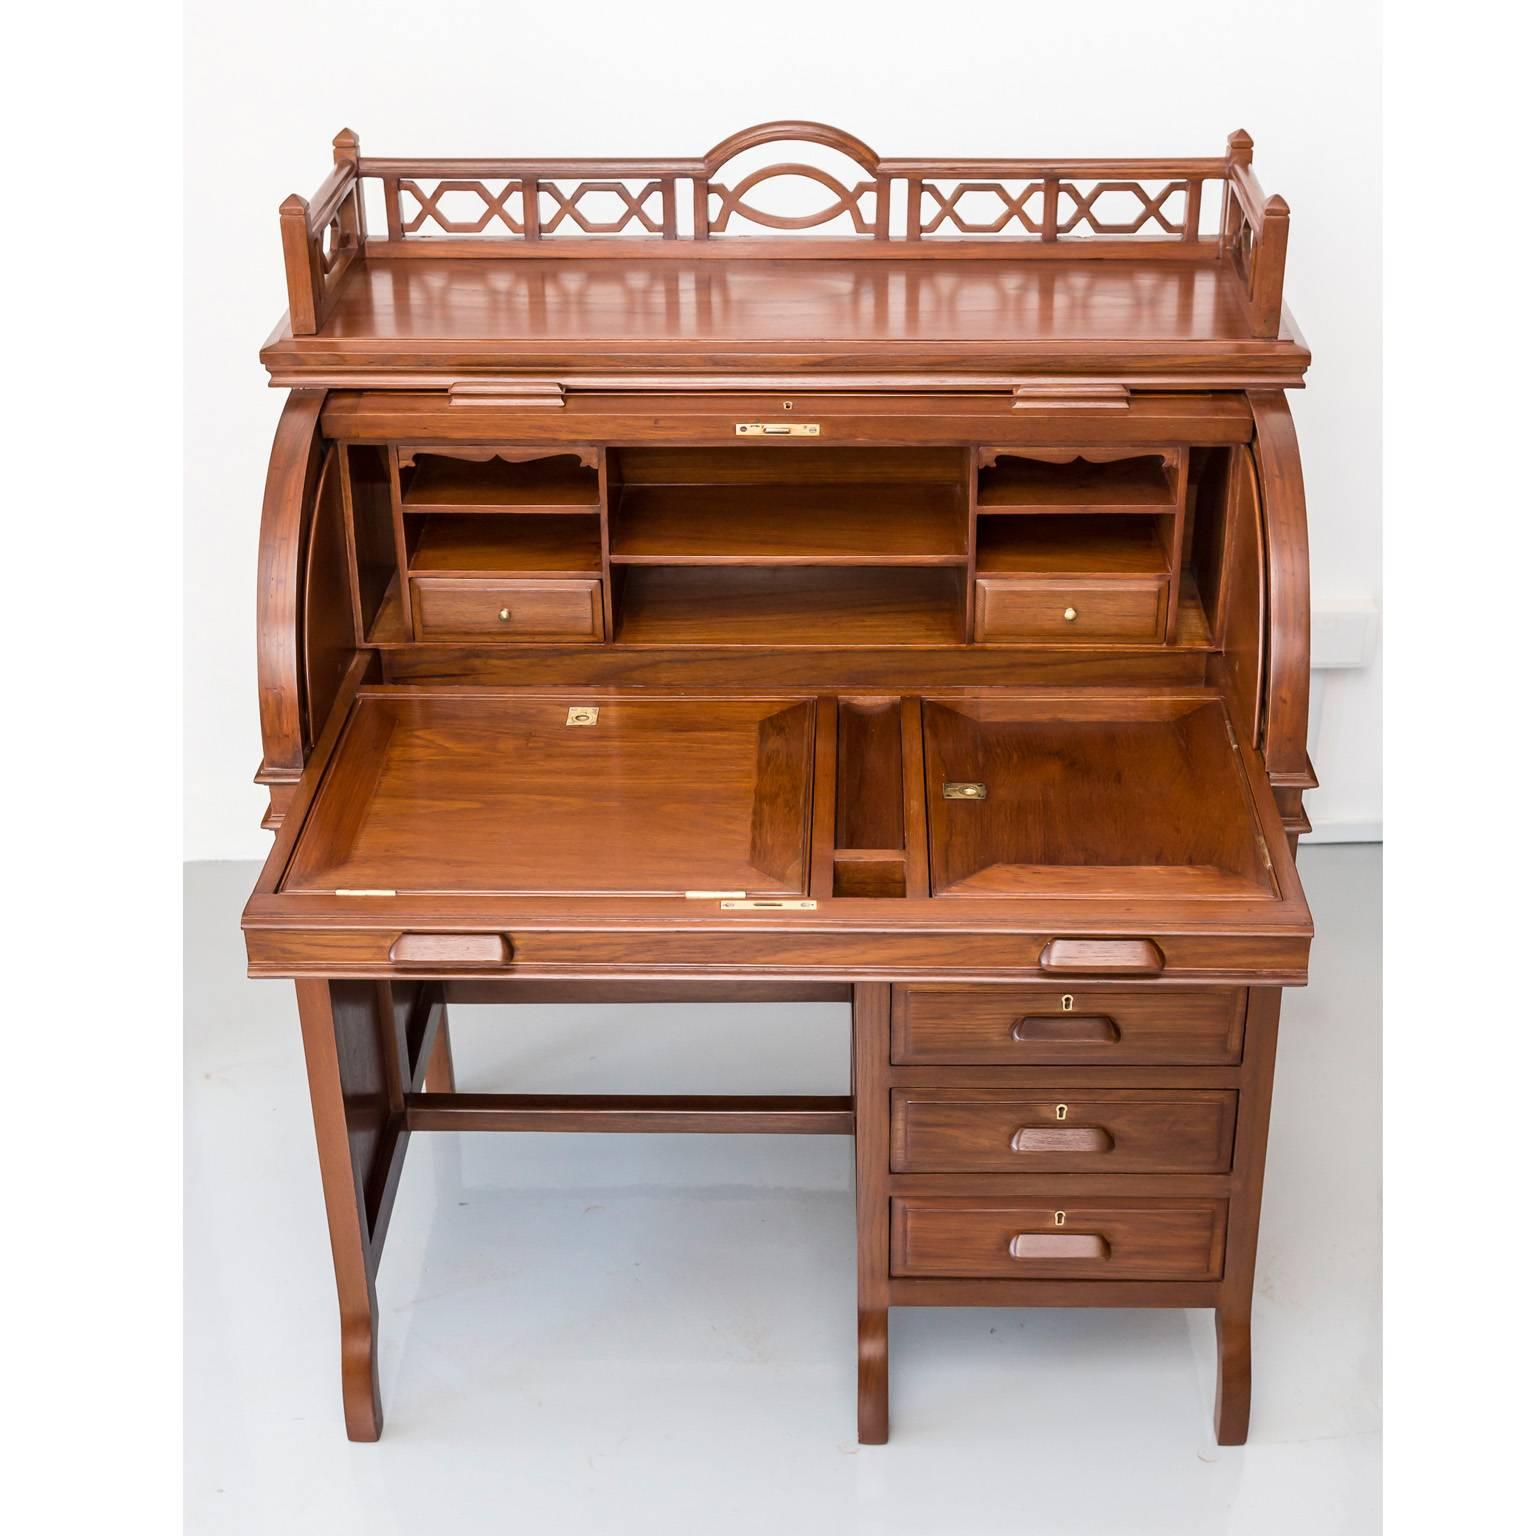 Antique Anglo-Indian or British Colonial Teak Wood Cylinder Desk 2